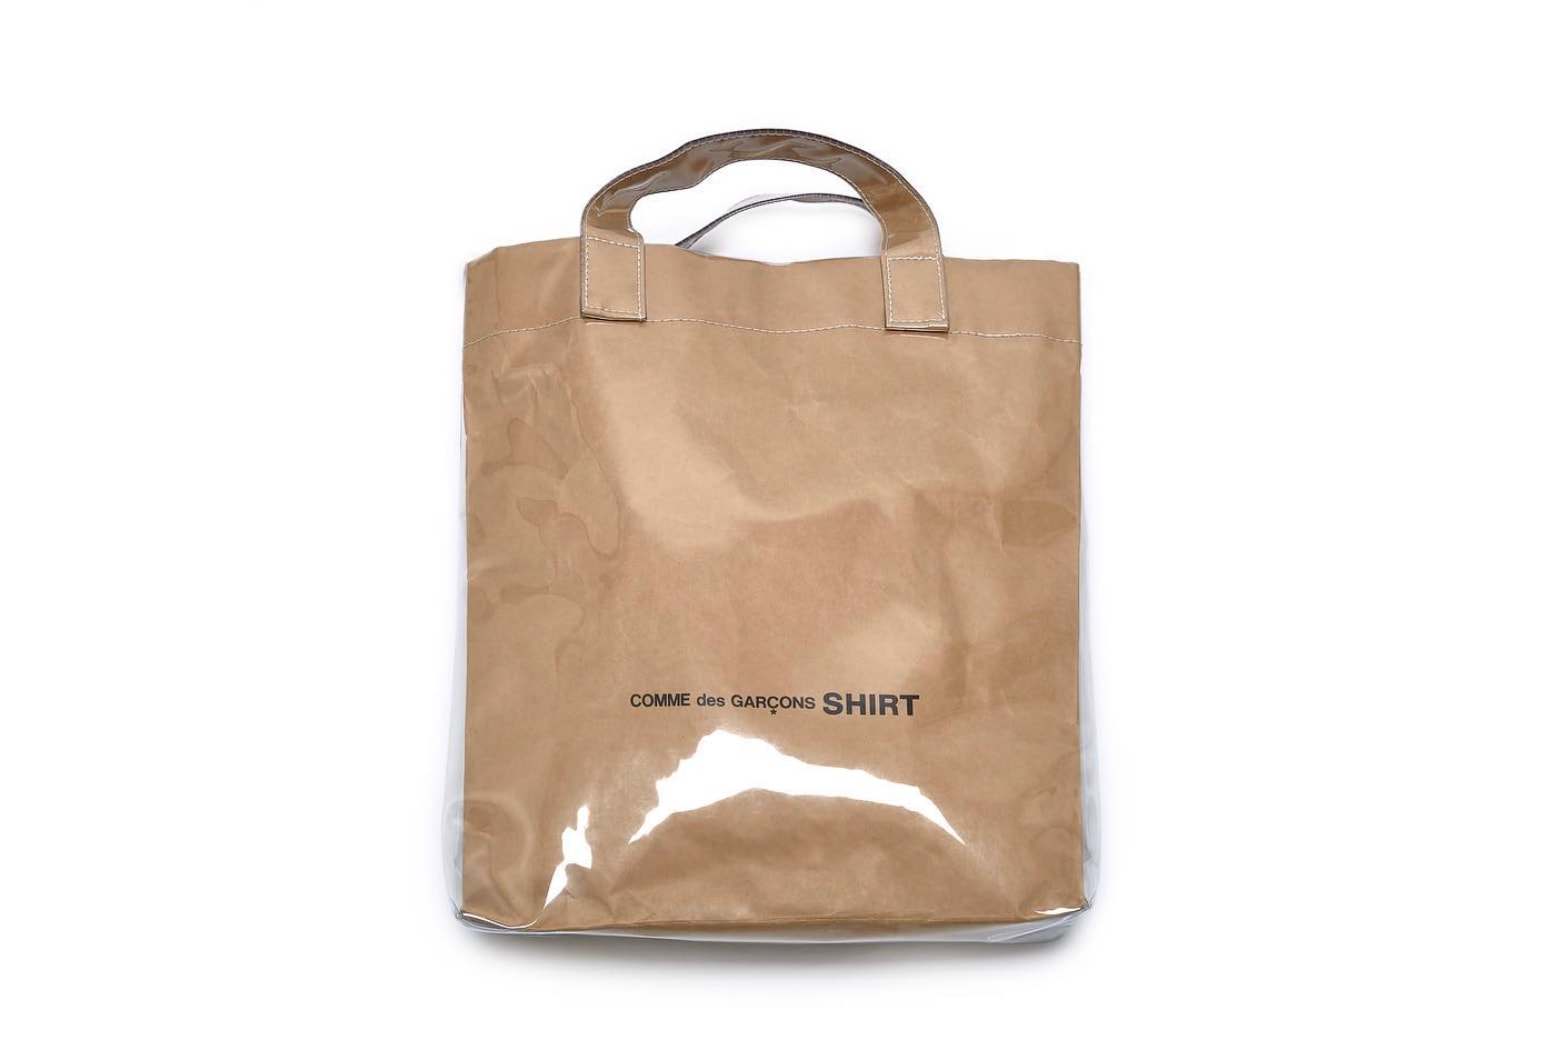 COMME des GARÇONS SHIRT 推出全新包袋